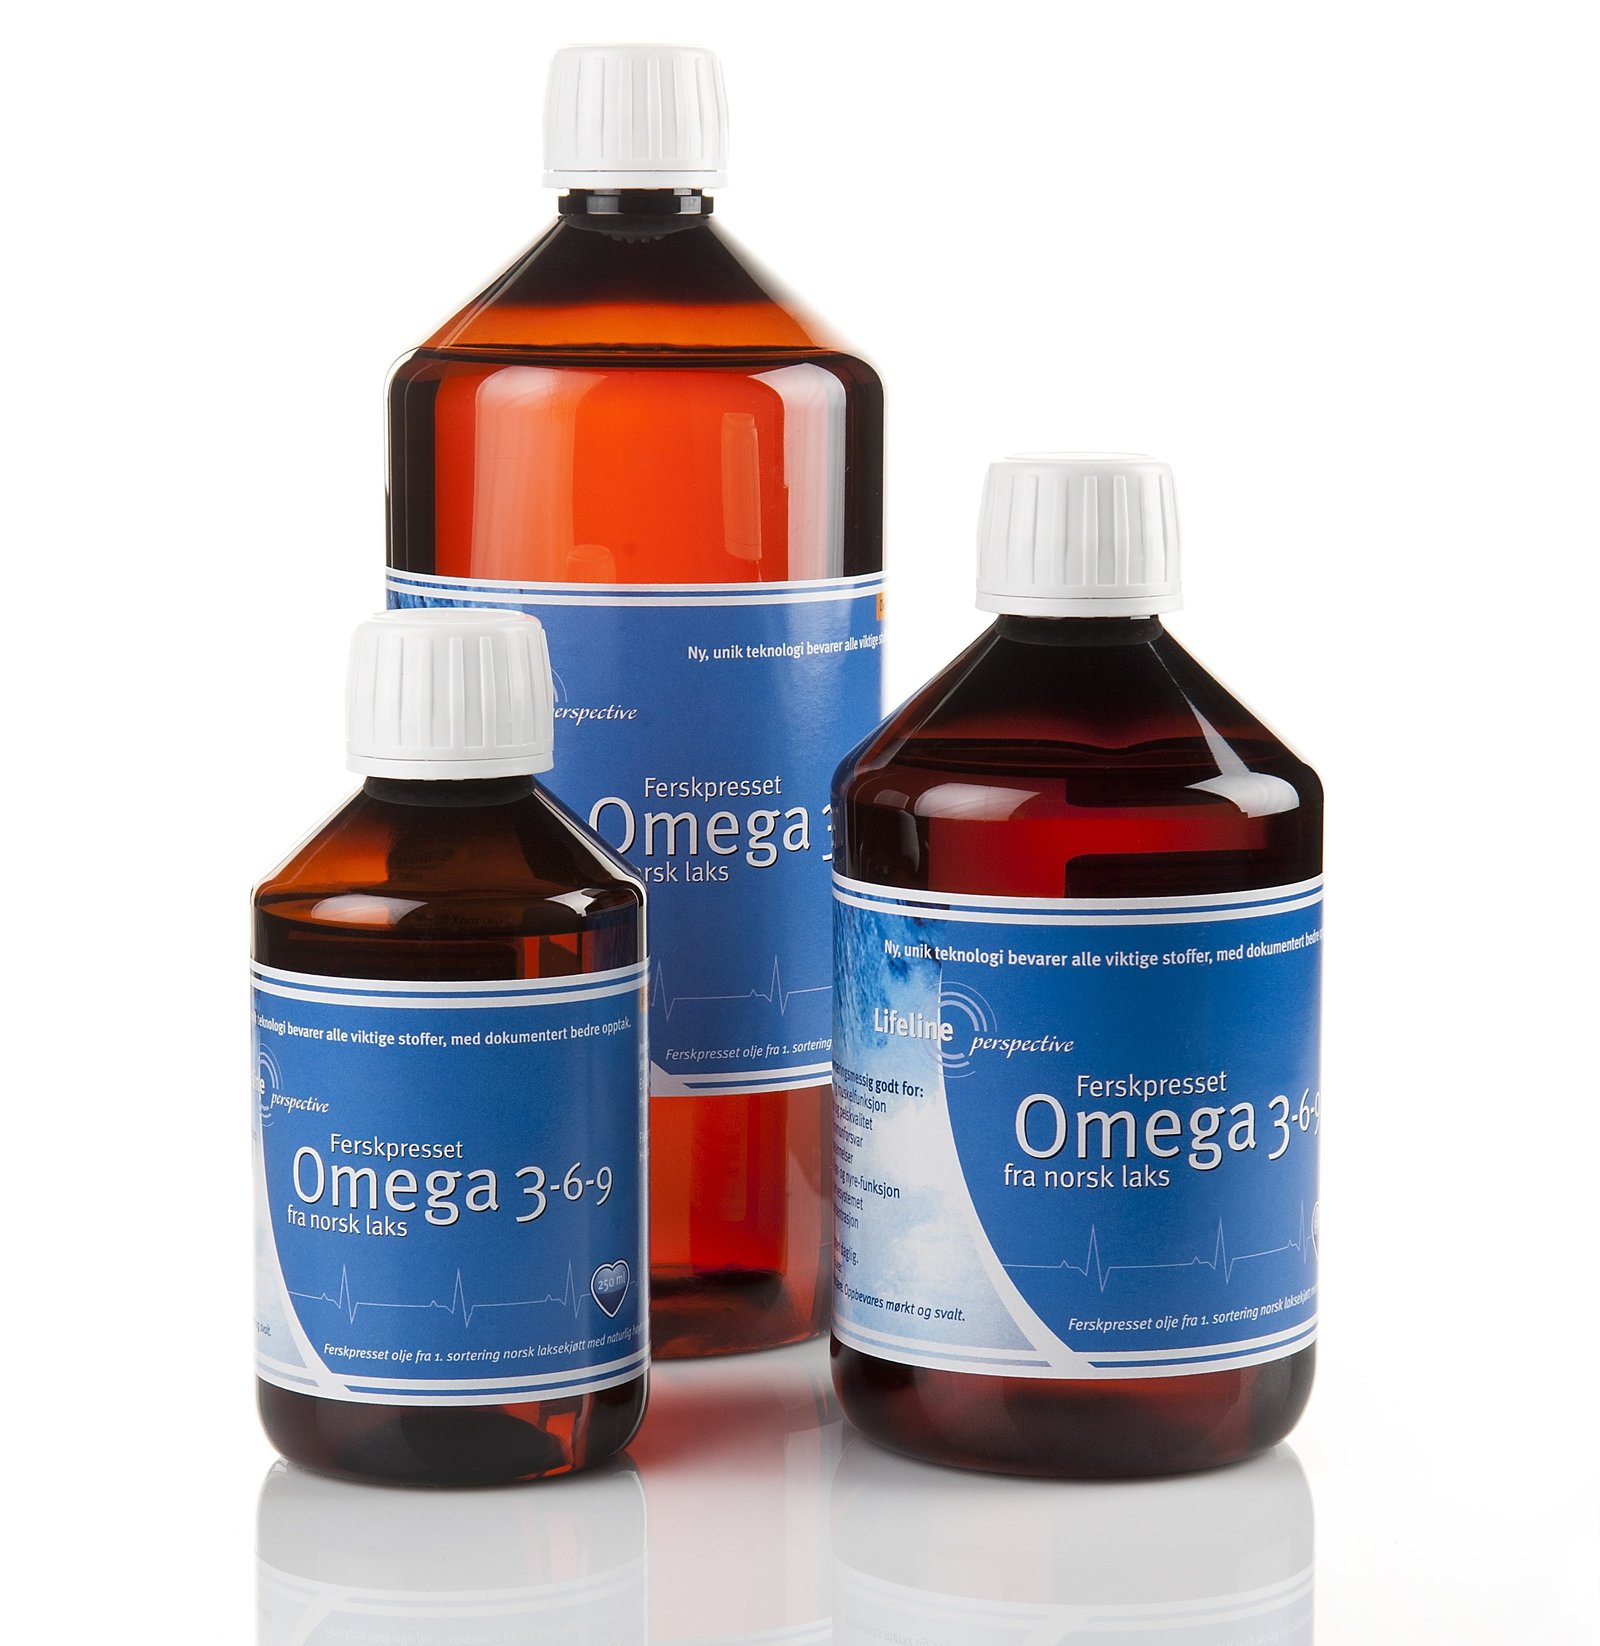 Lifeline A/S Omega3-6-9 1000 ml